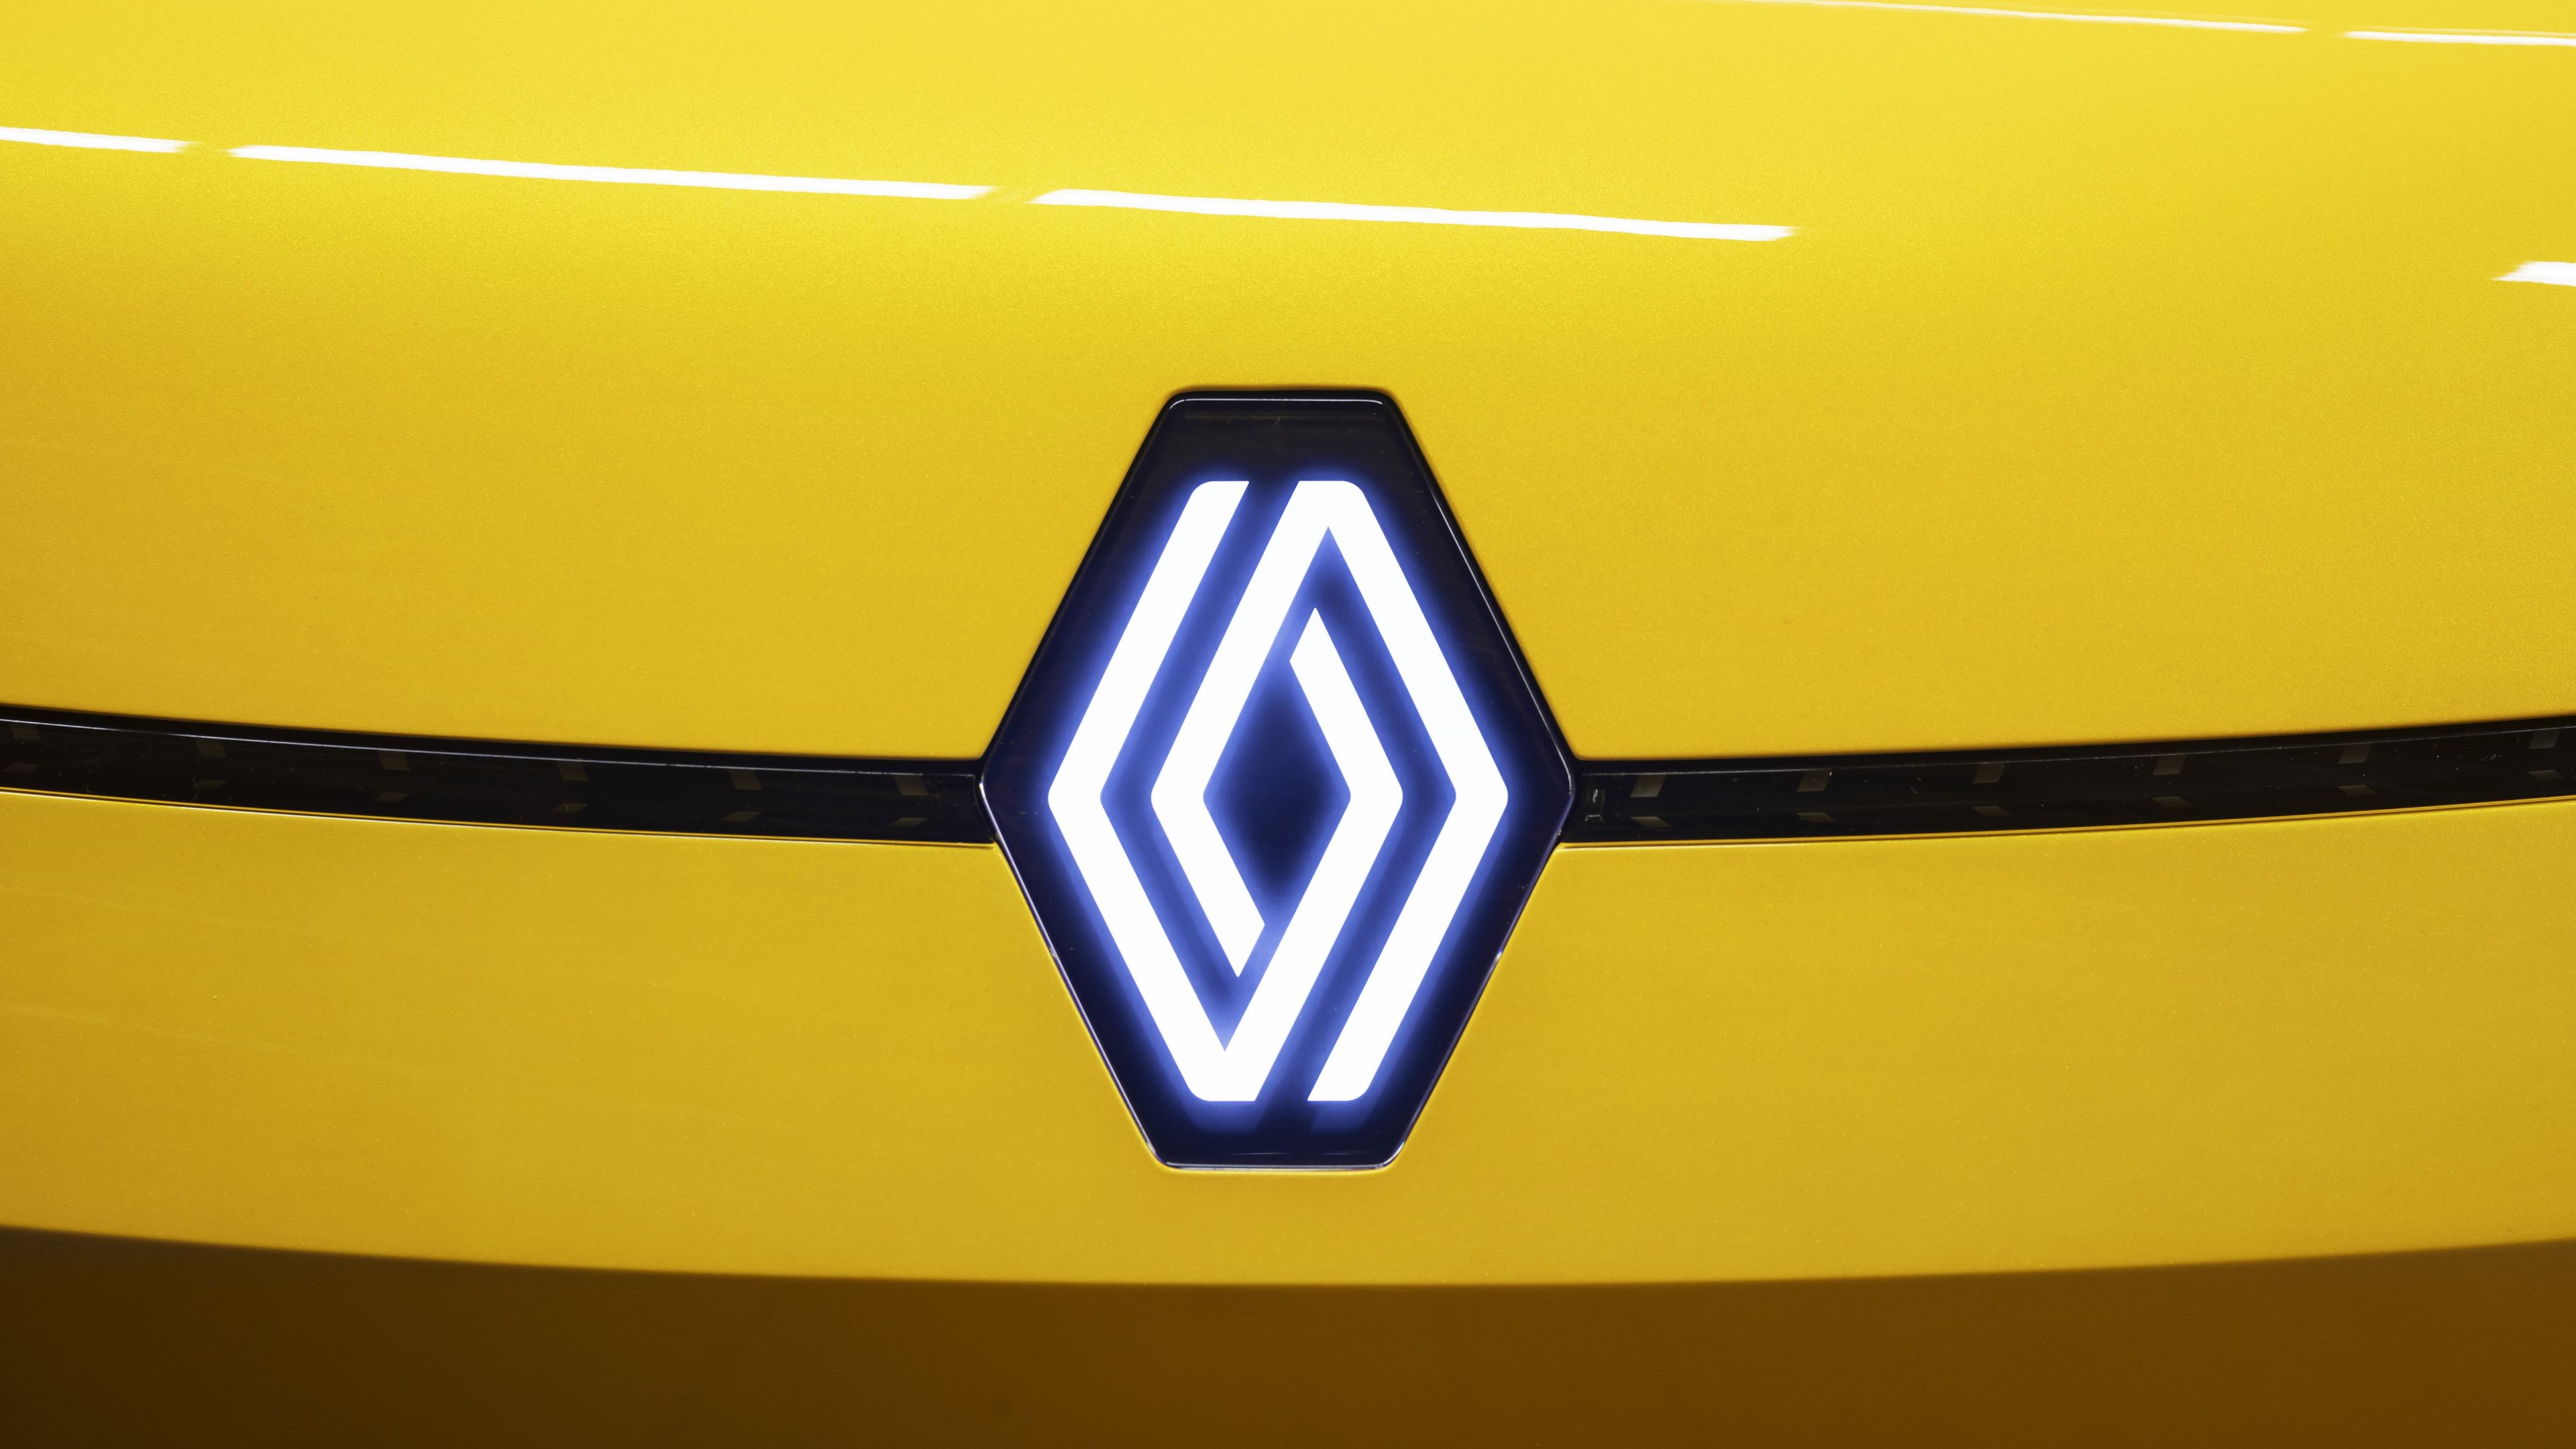 Logo de Renault